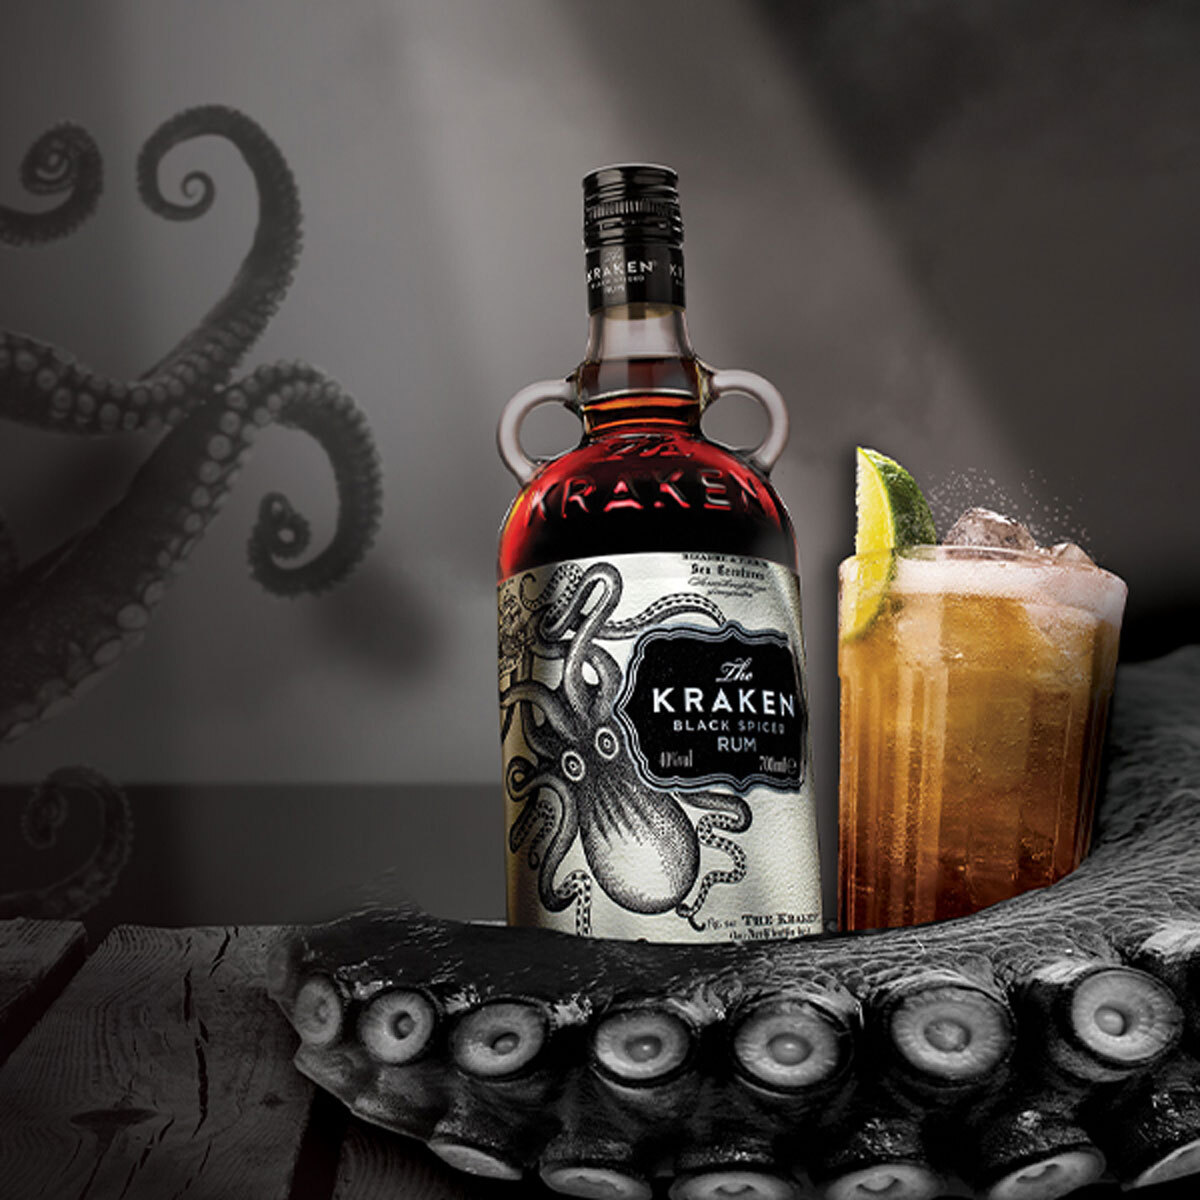 Lifestyle image of Kraken rum with Kraken in the background